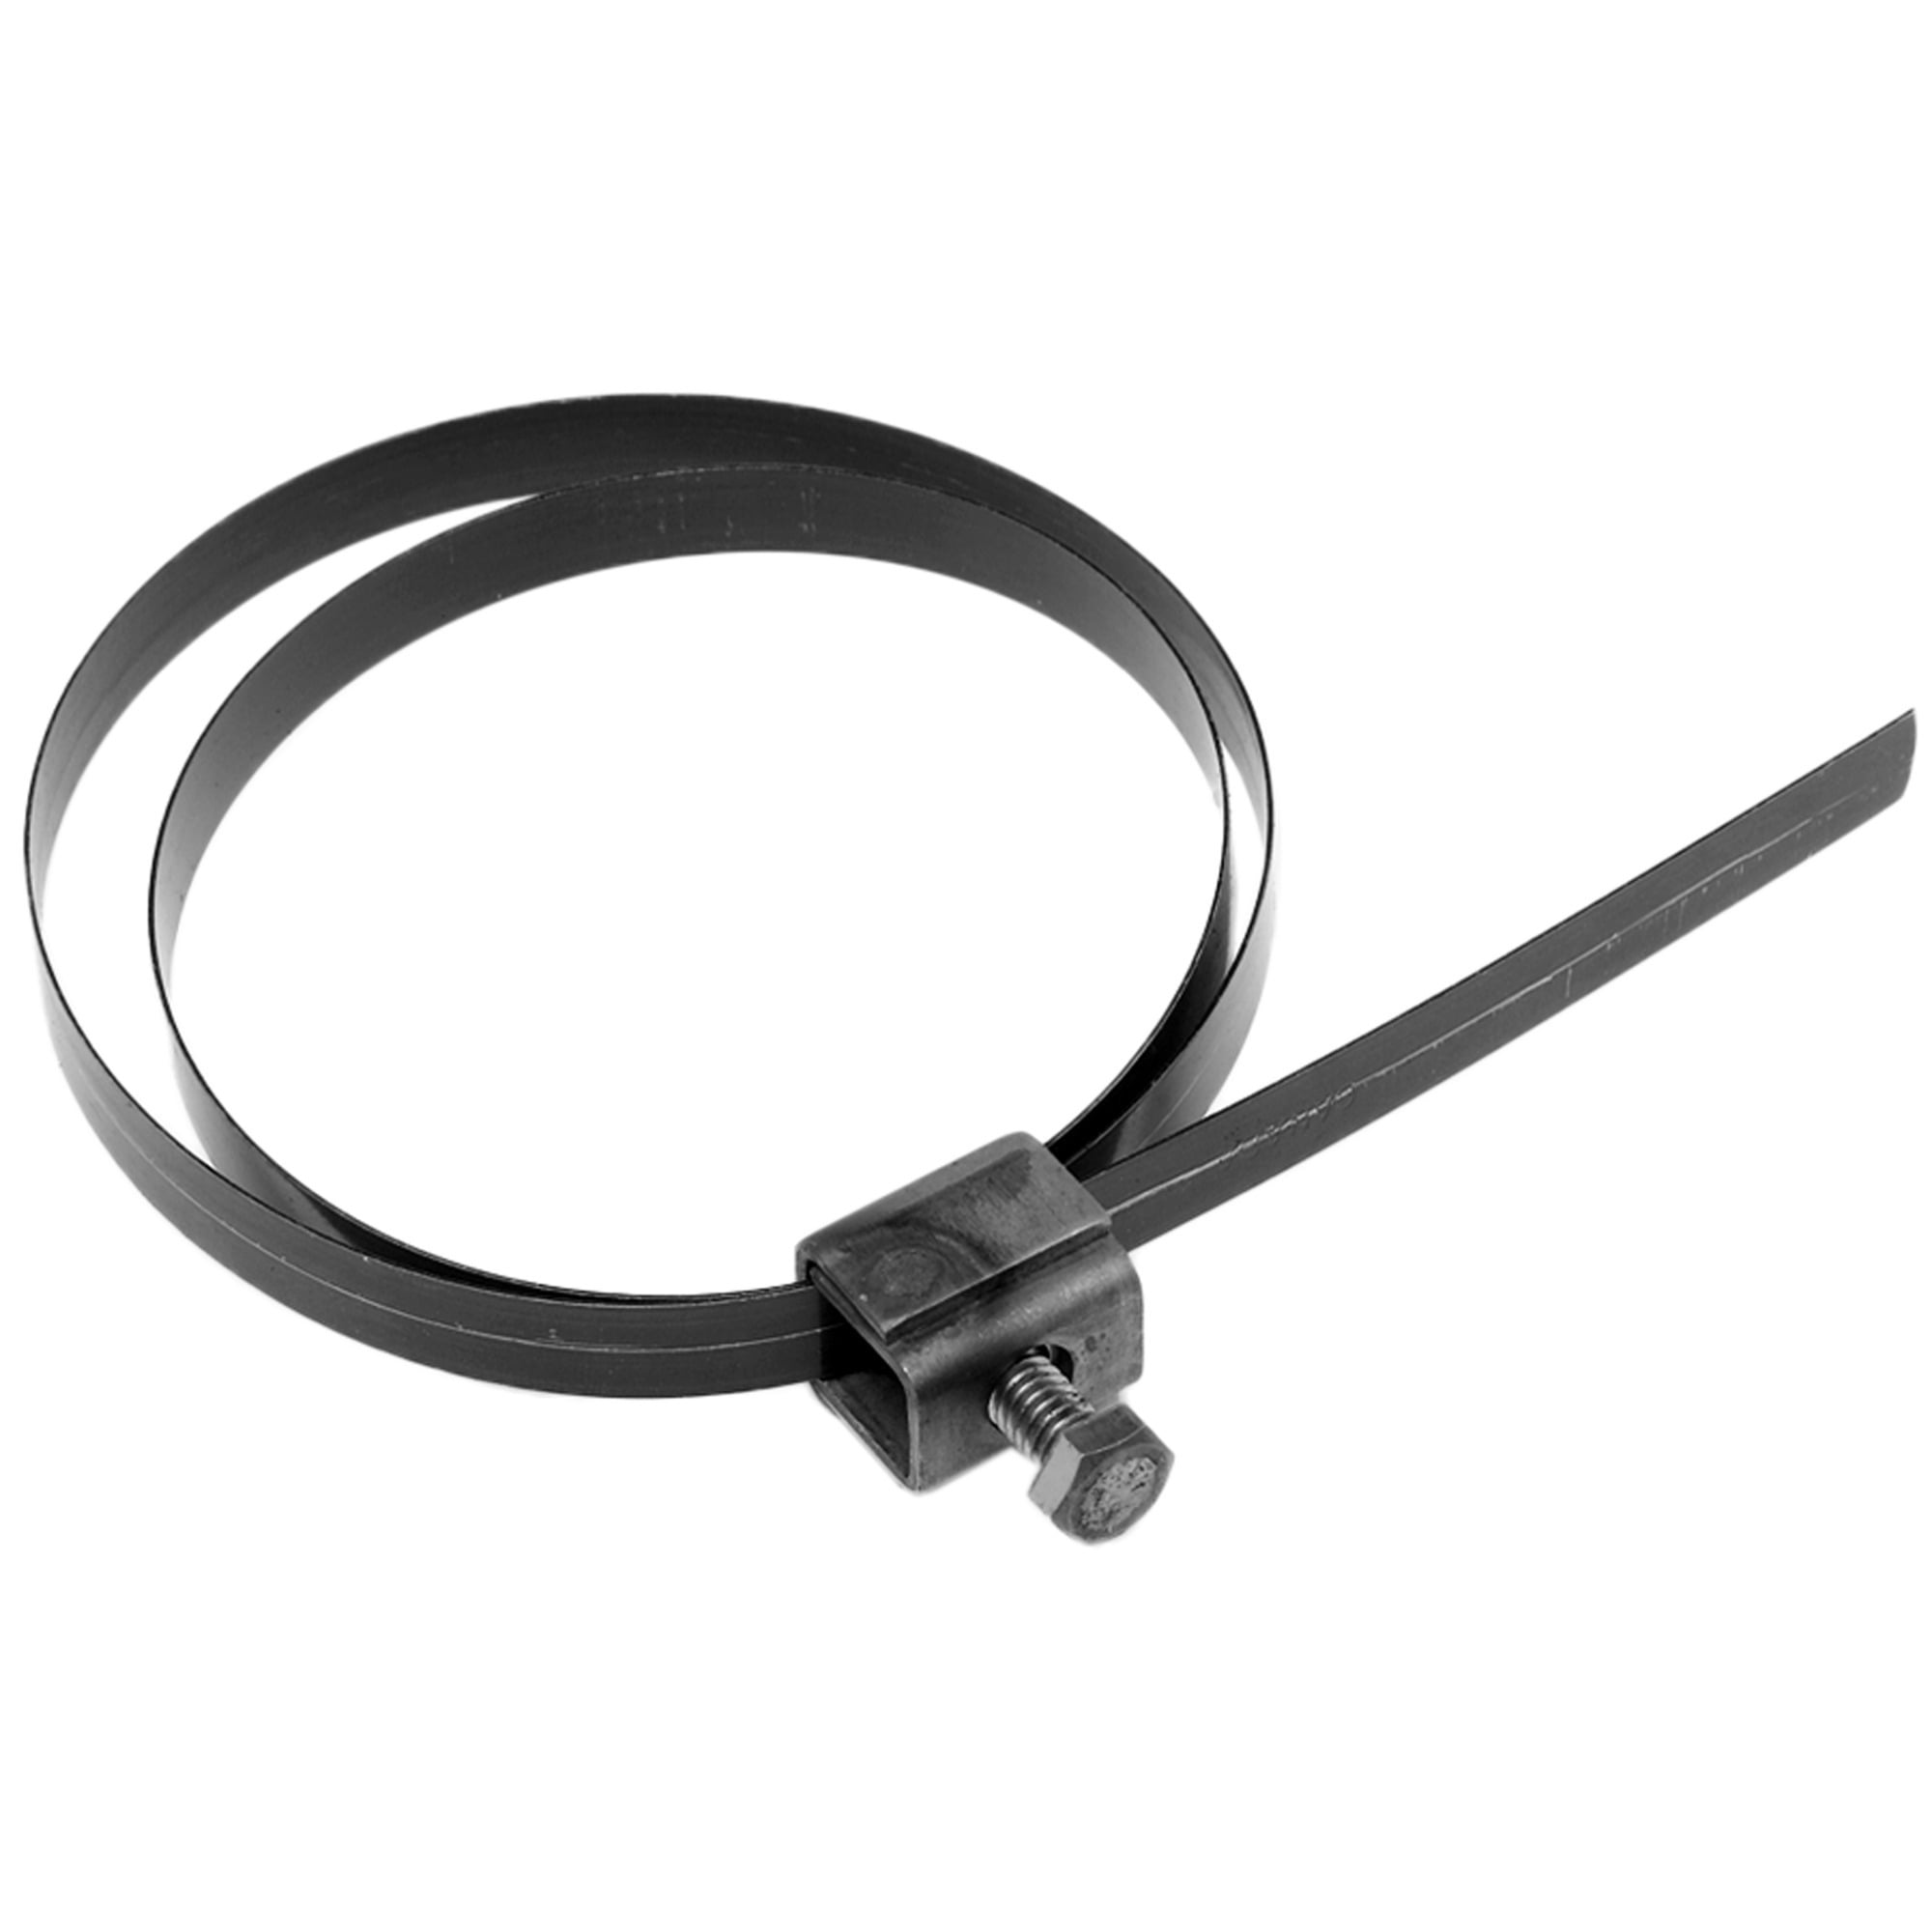 150xStainless Exhaust Wrap Zip Cable Tie Gun Auto Tightener Cut Fasten Accessory